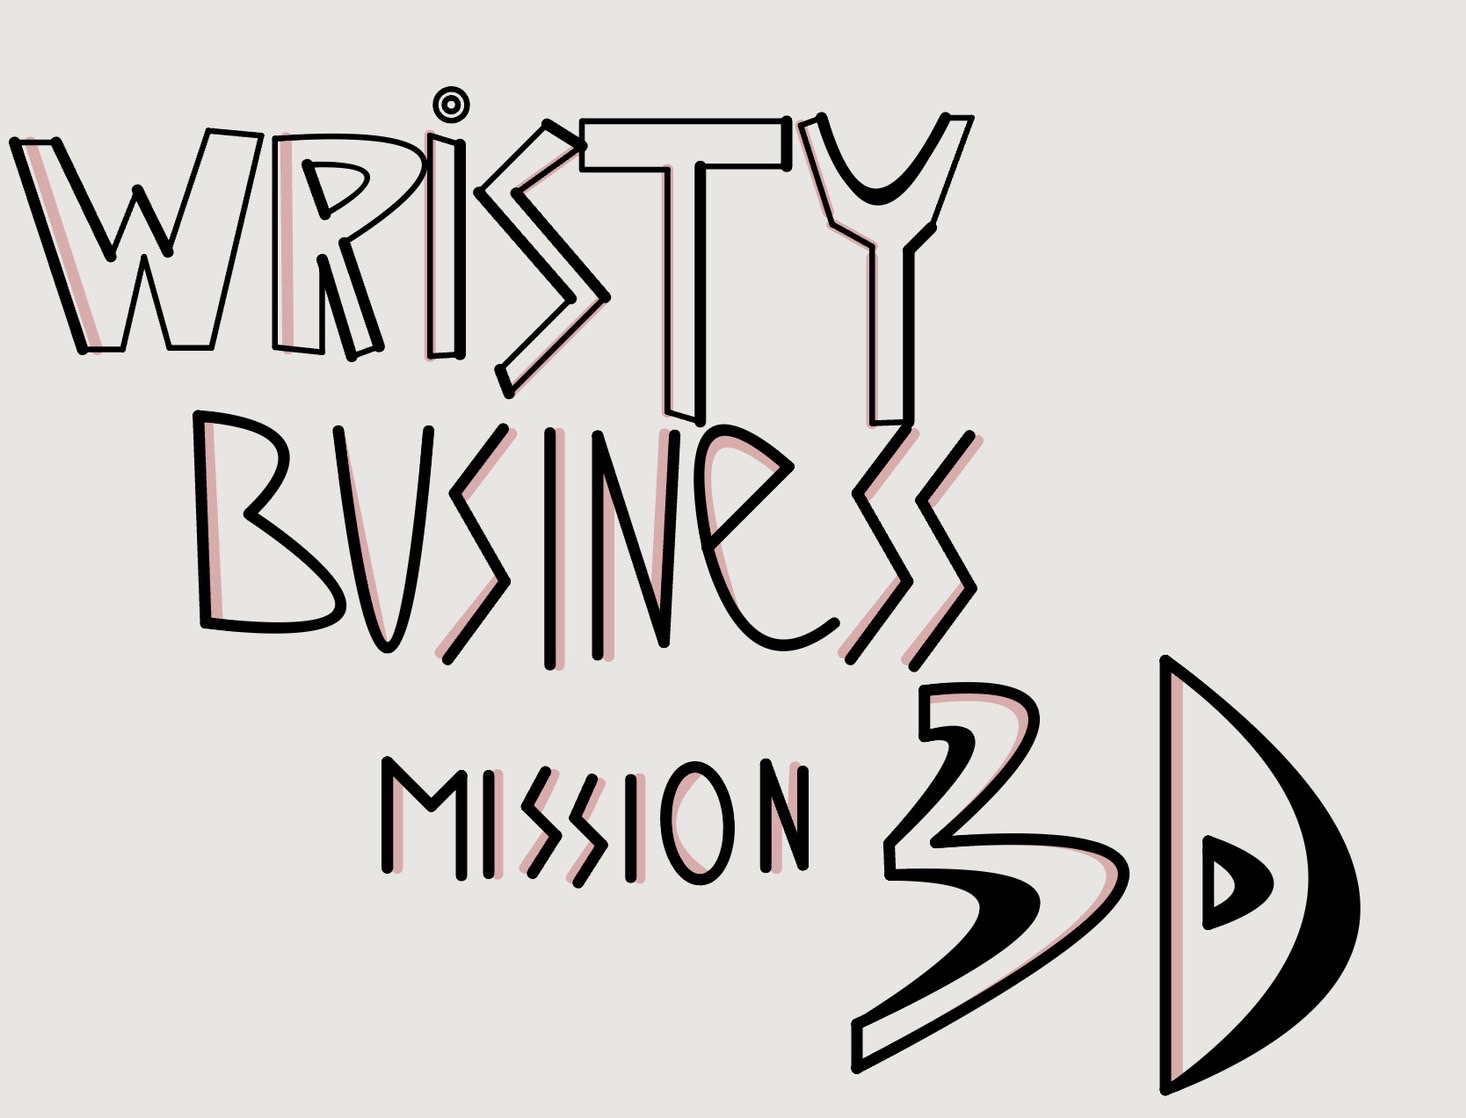 Team Logo: Wristy Business Mission 3D